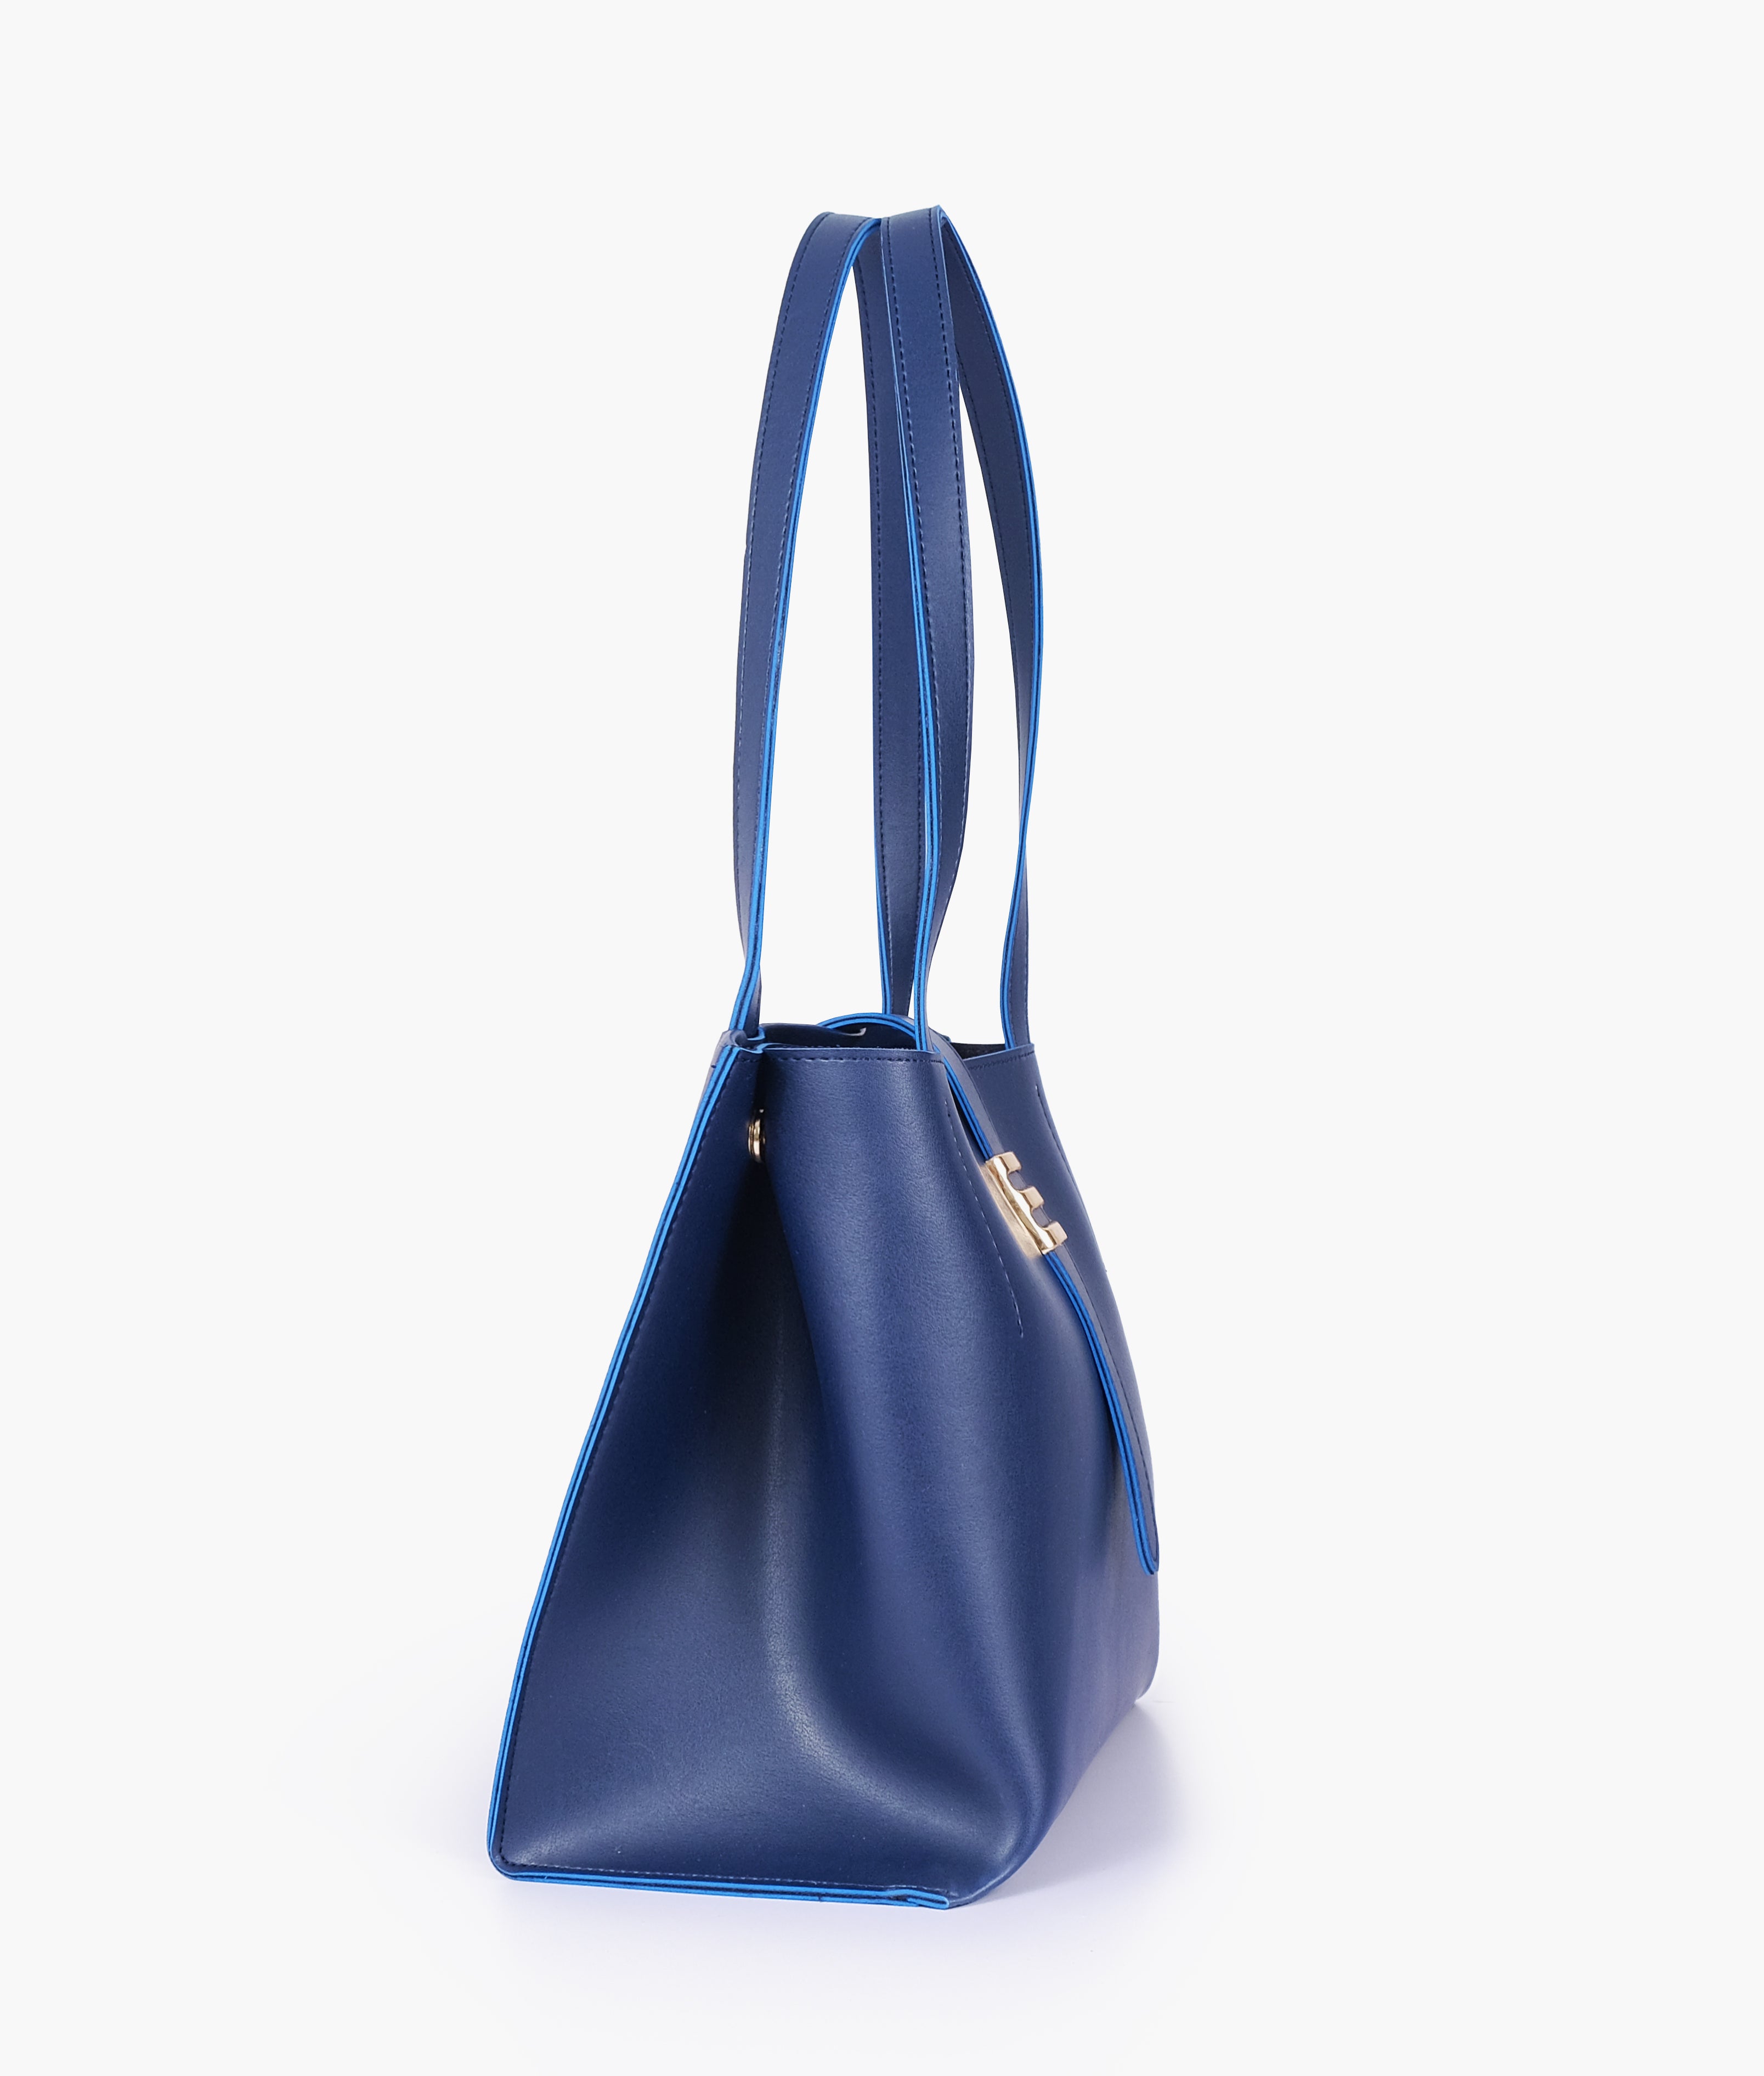 Blue mini tote bag